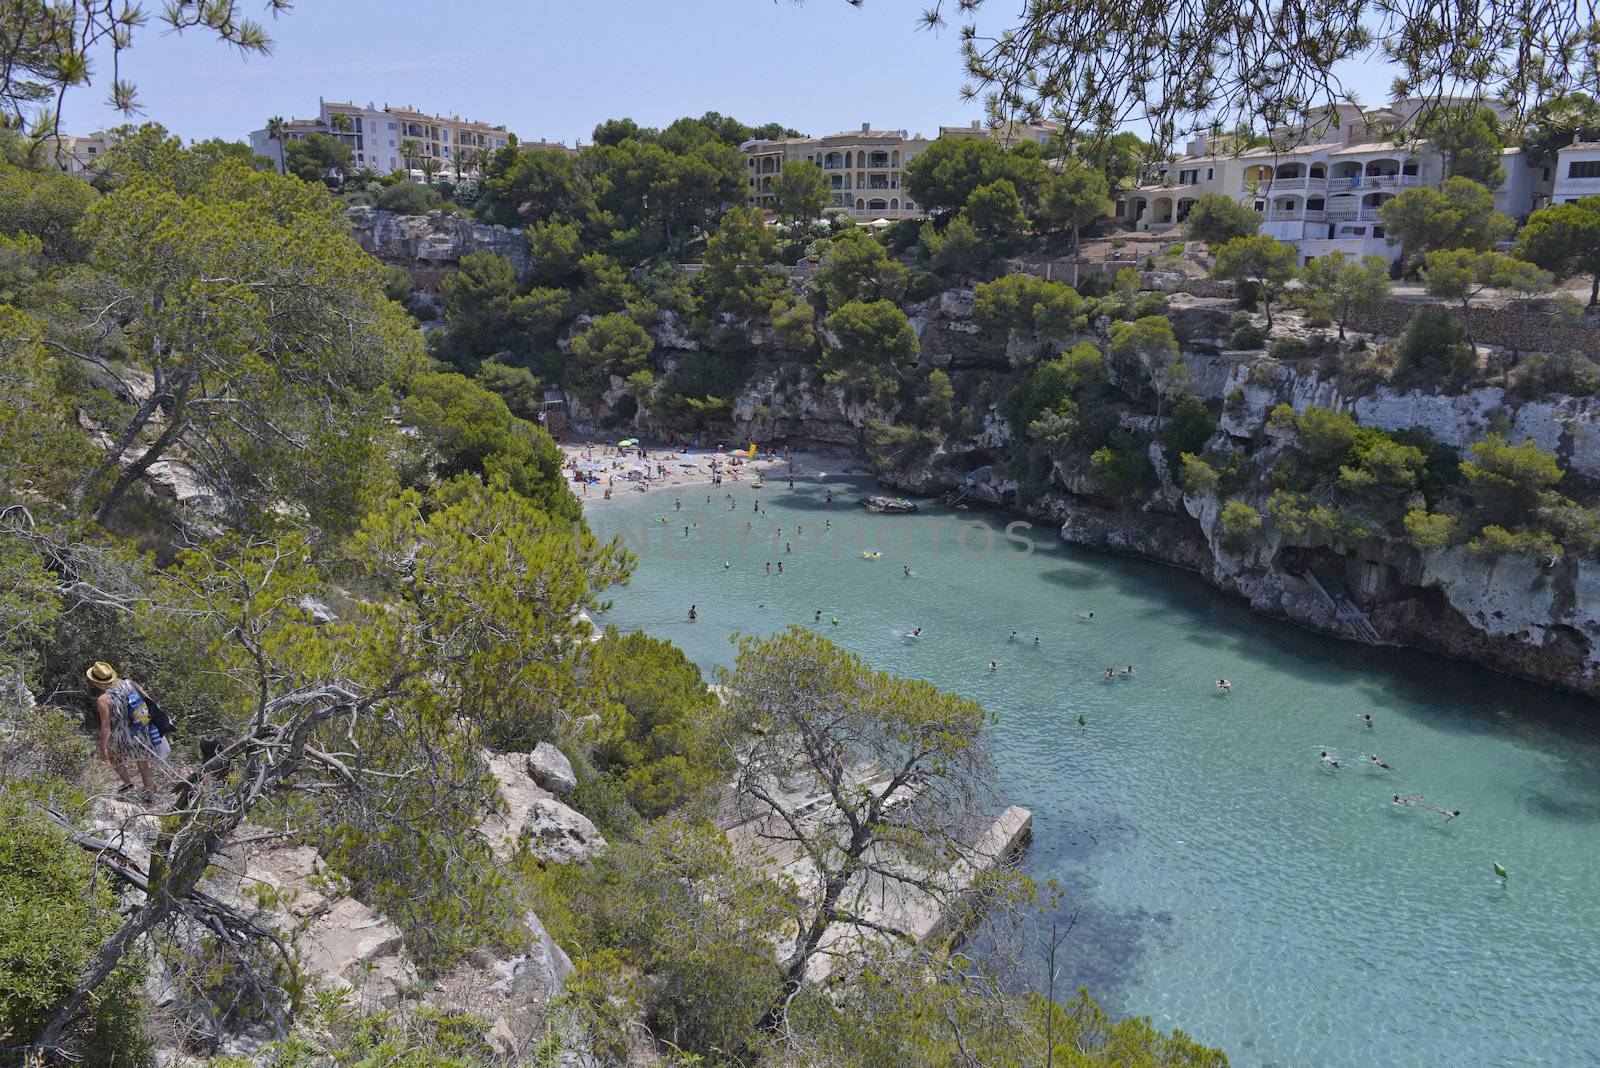 The Beautiful Beach of Cala Pi in Mallorca, Spain ( Balearic Islands )